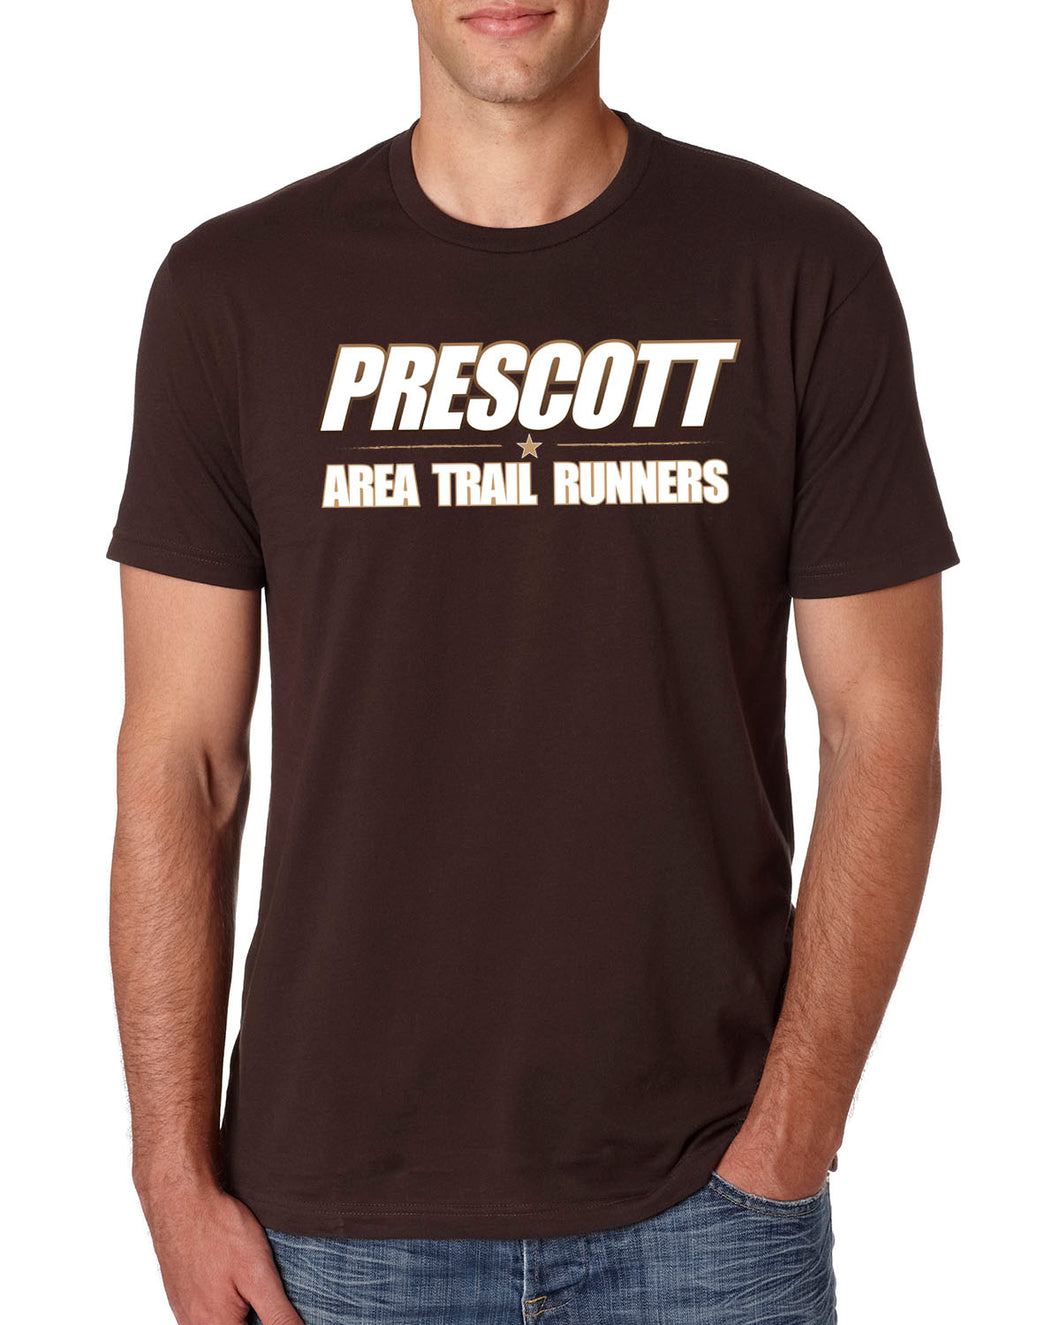 PATR - Prescott Area Trail Runners - Bold - Men's T-Shirt